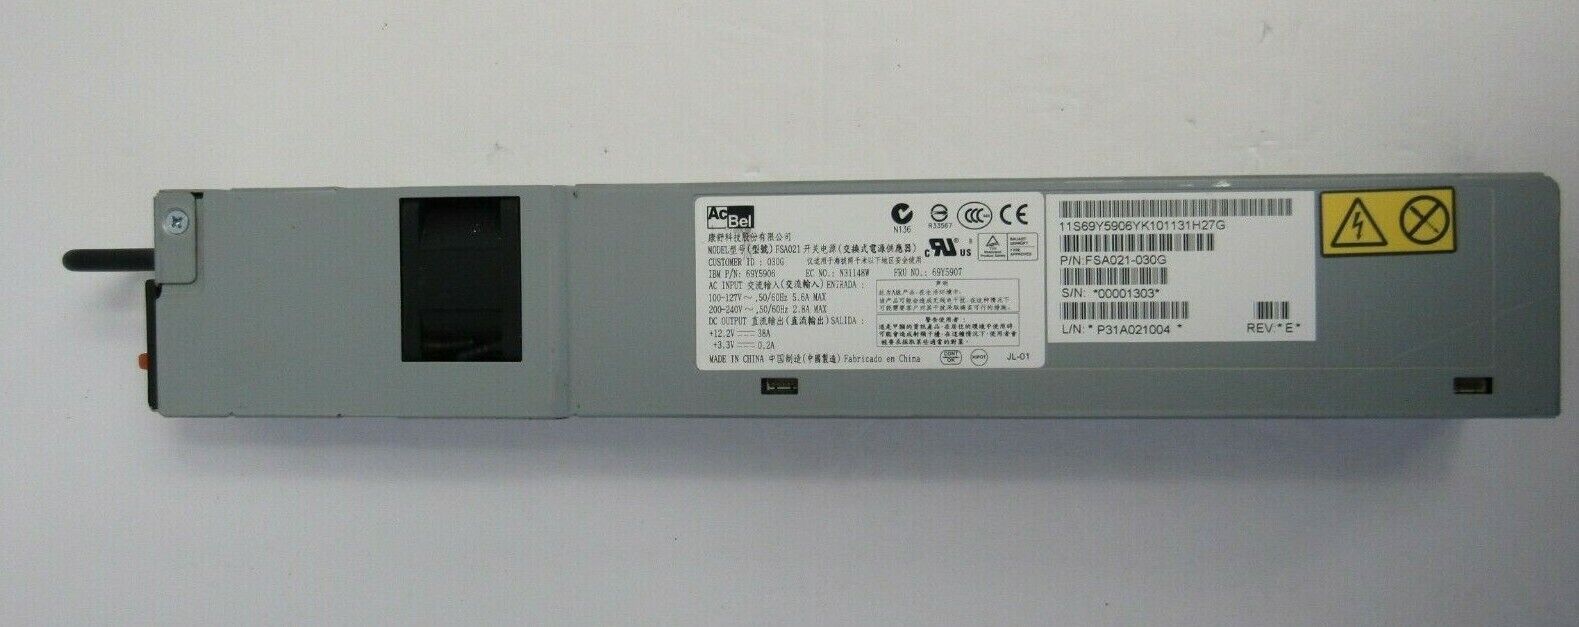 IBM 69Y5907 AcBel FSA021 460W Hot Swap Redundant Power Supply for System X 17-3